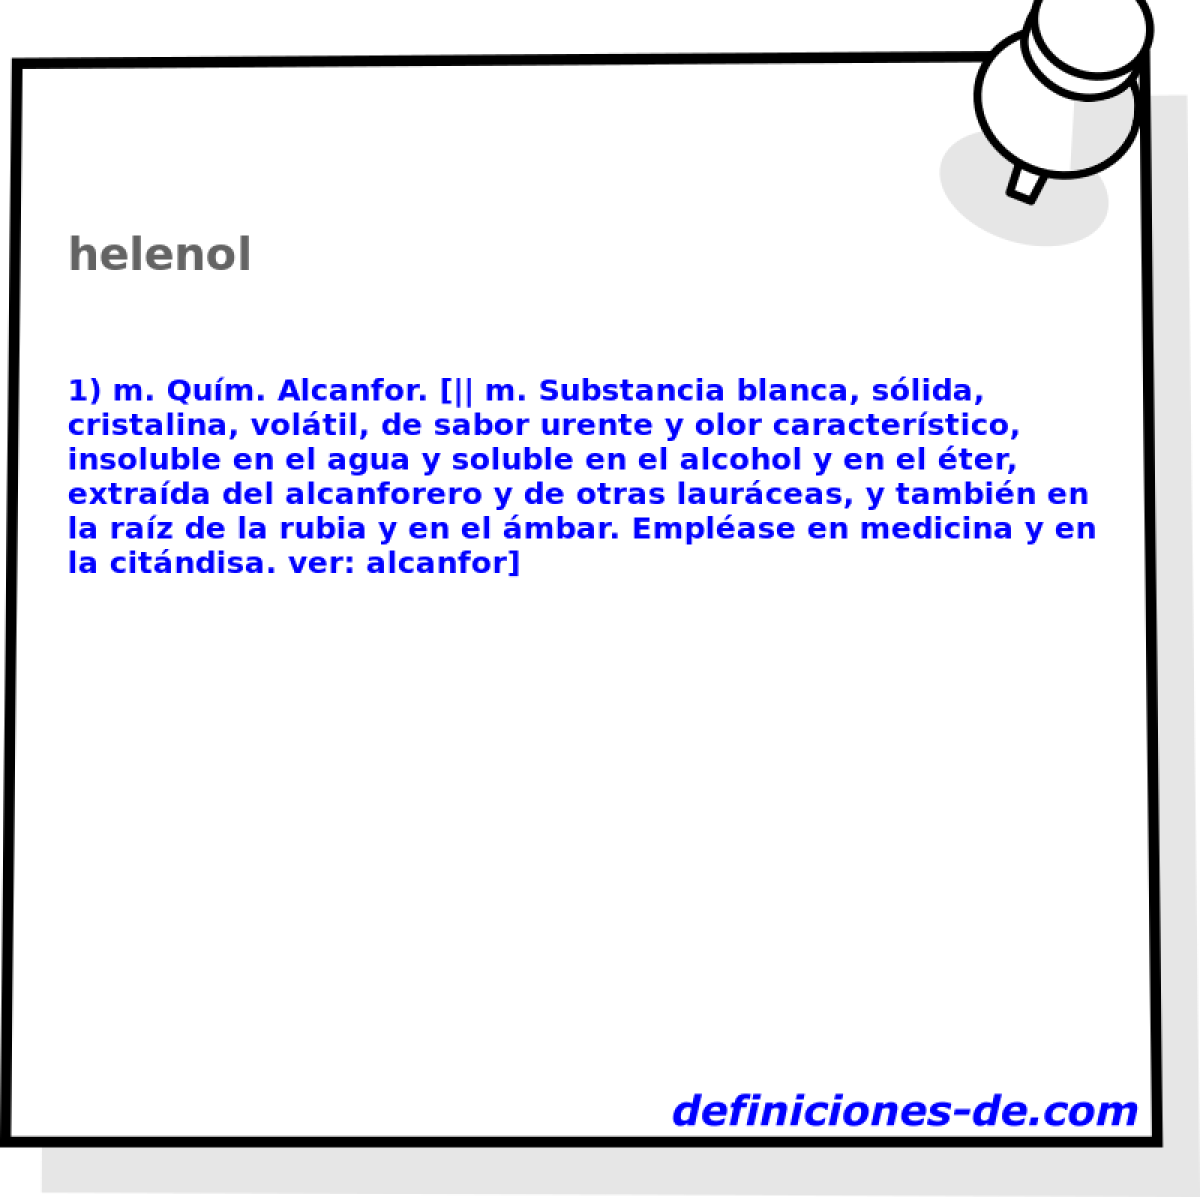 helenol 